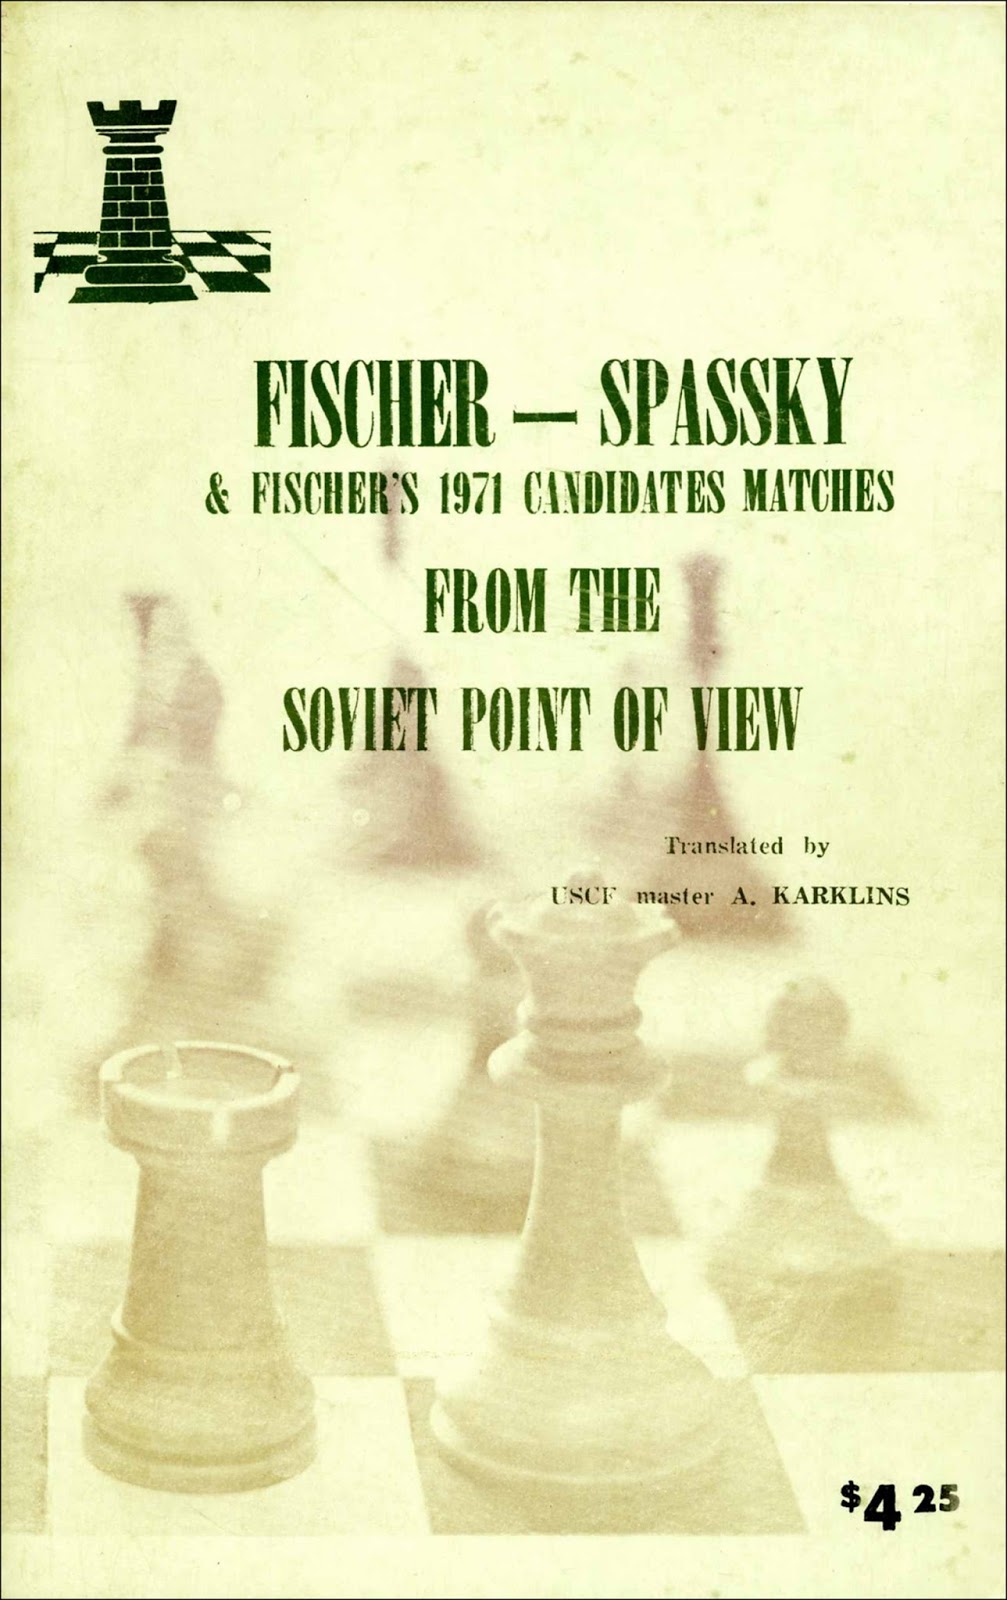 Bobby Fischer vs Boris Spassky, Ch World Match 1972 Reykjavik Iceland, @Chessgambit630 in 2023